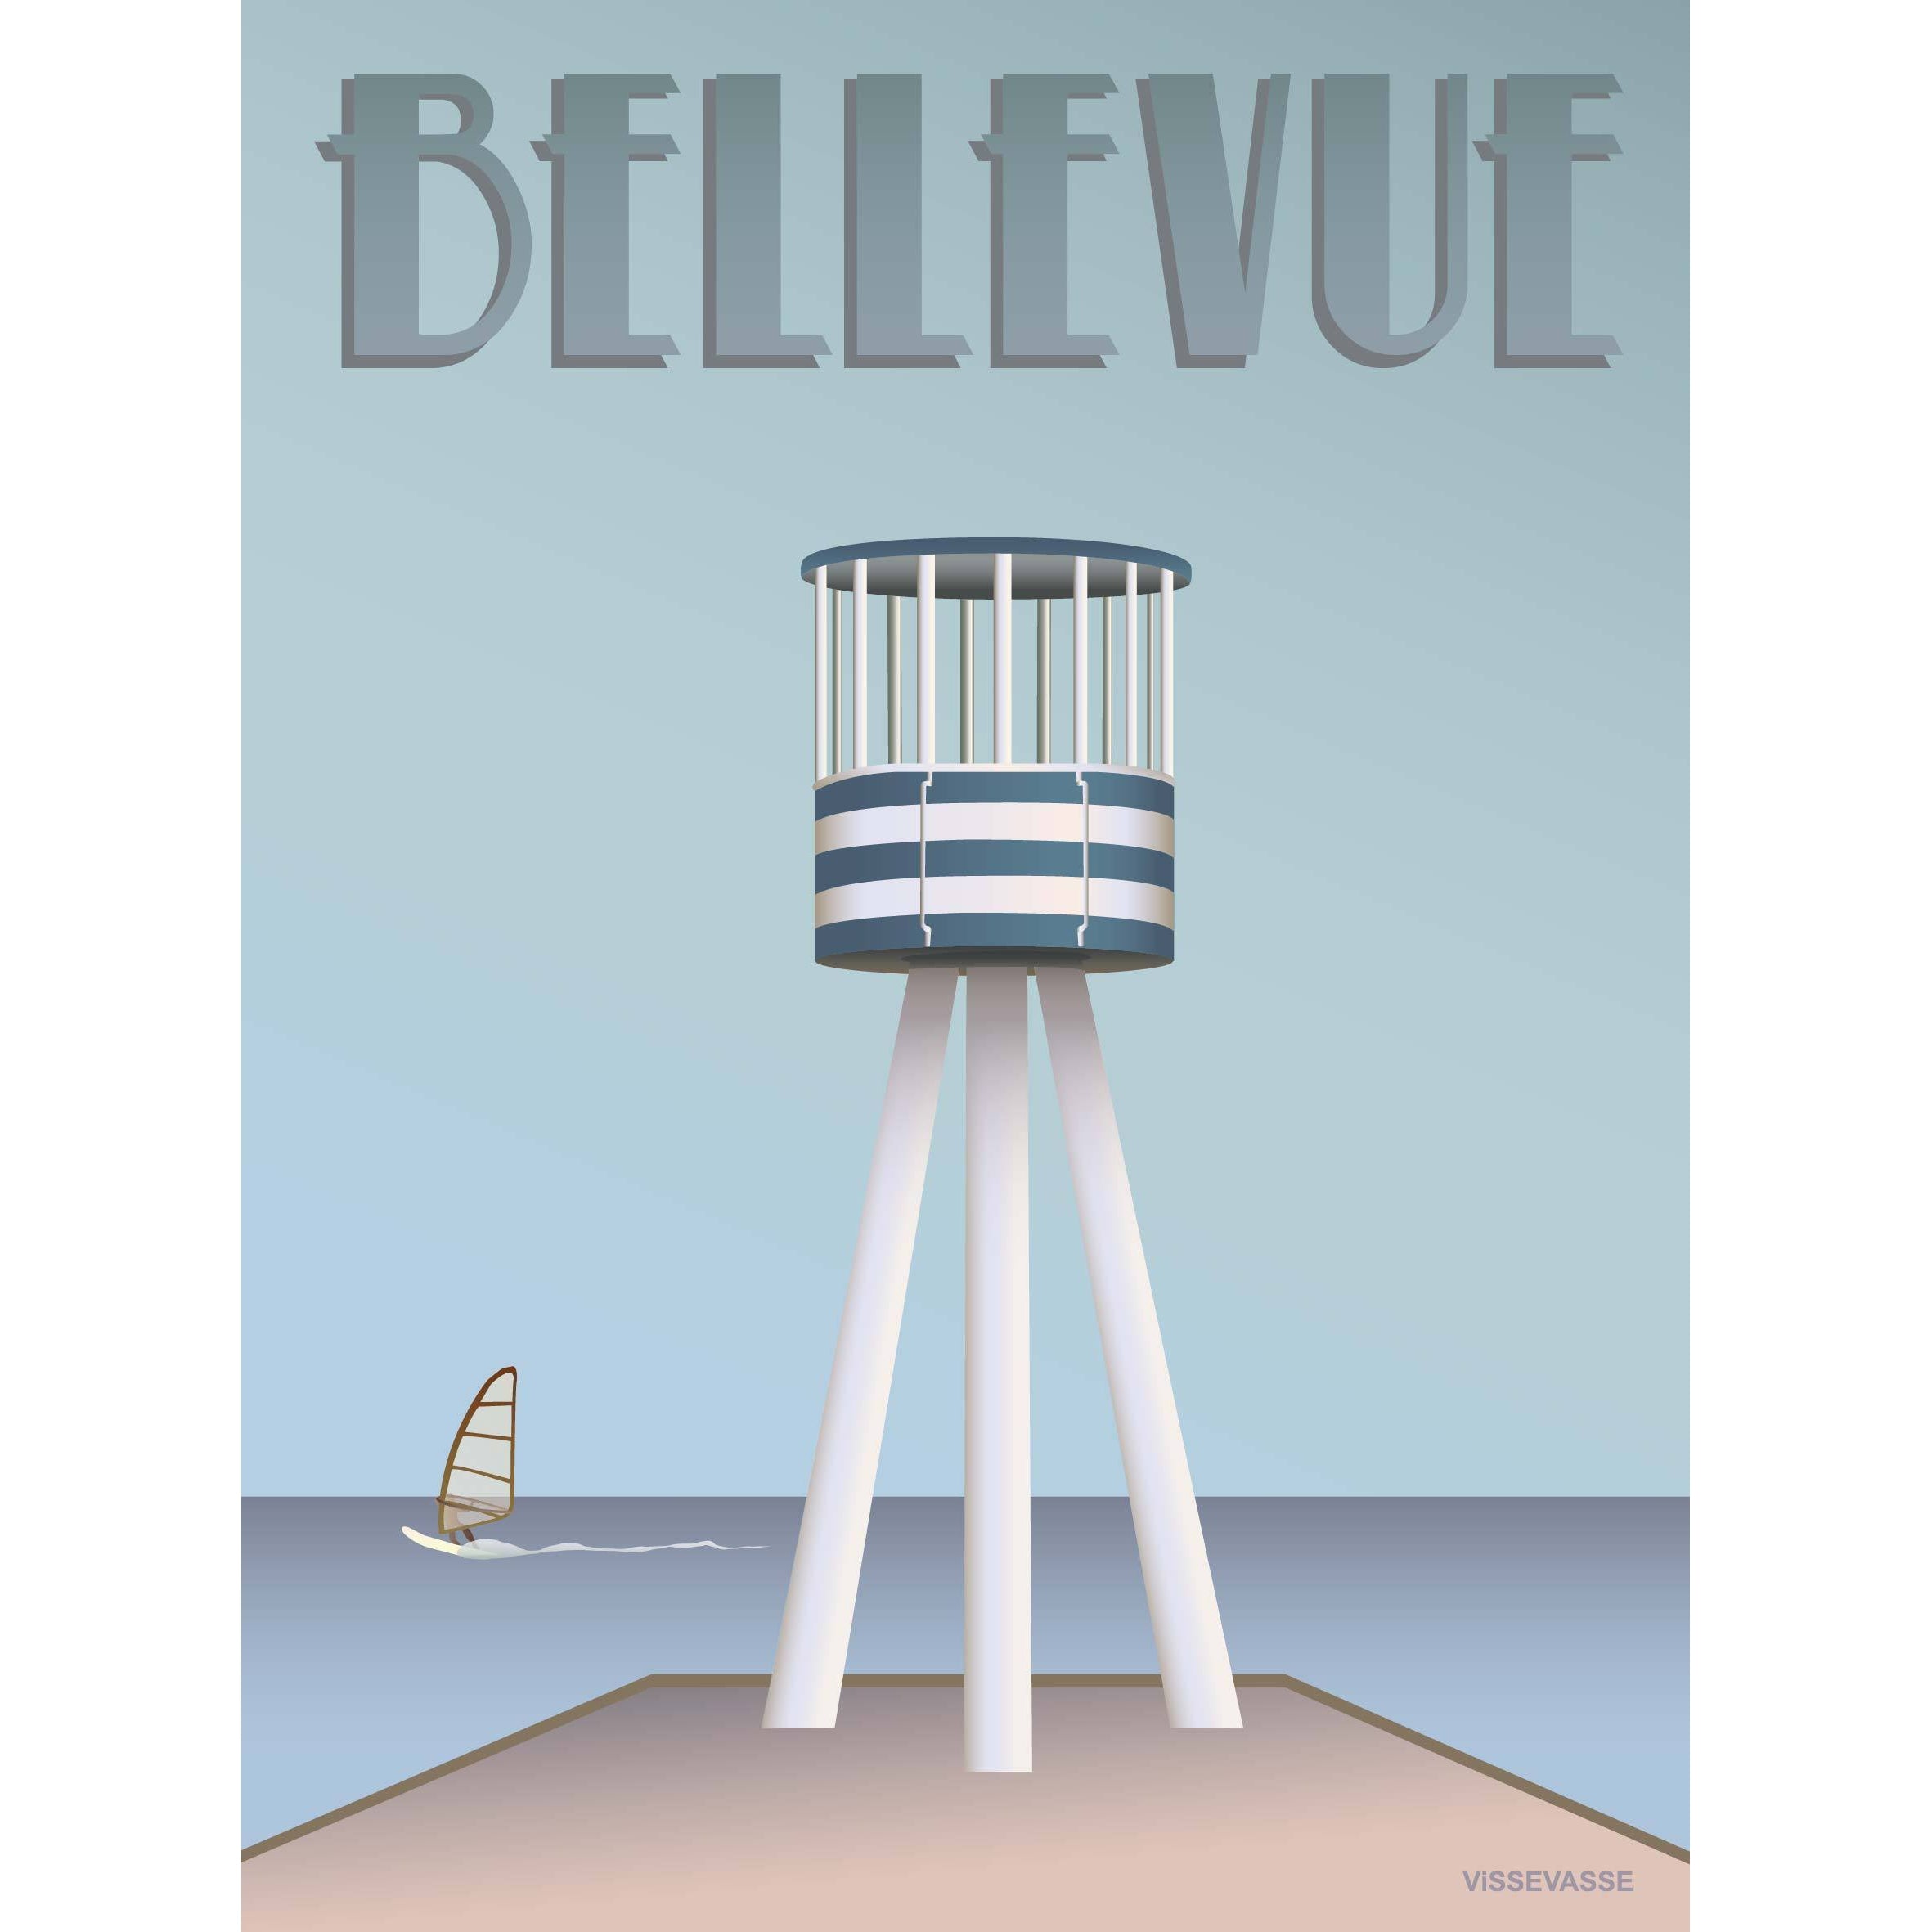 Vissevasse Bellevue Lifeguard Tower Tower Affiche, 15 x21 cm